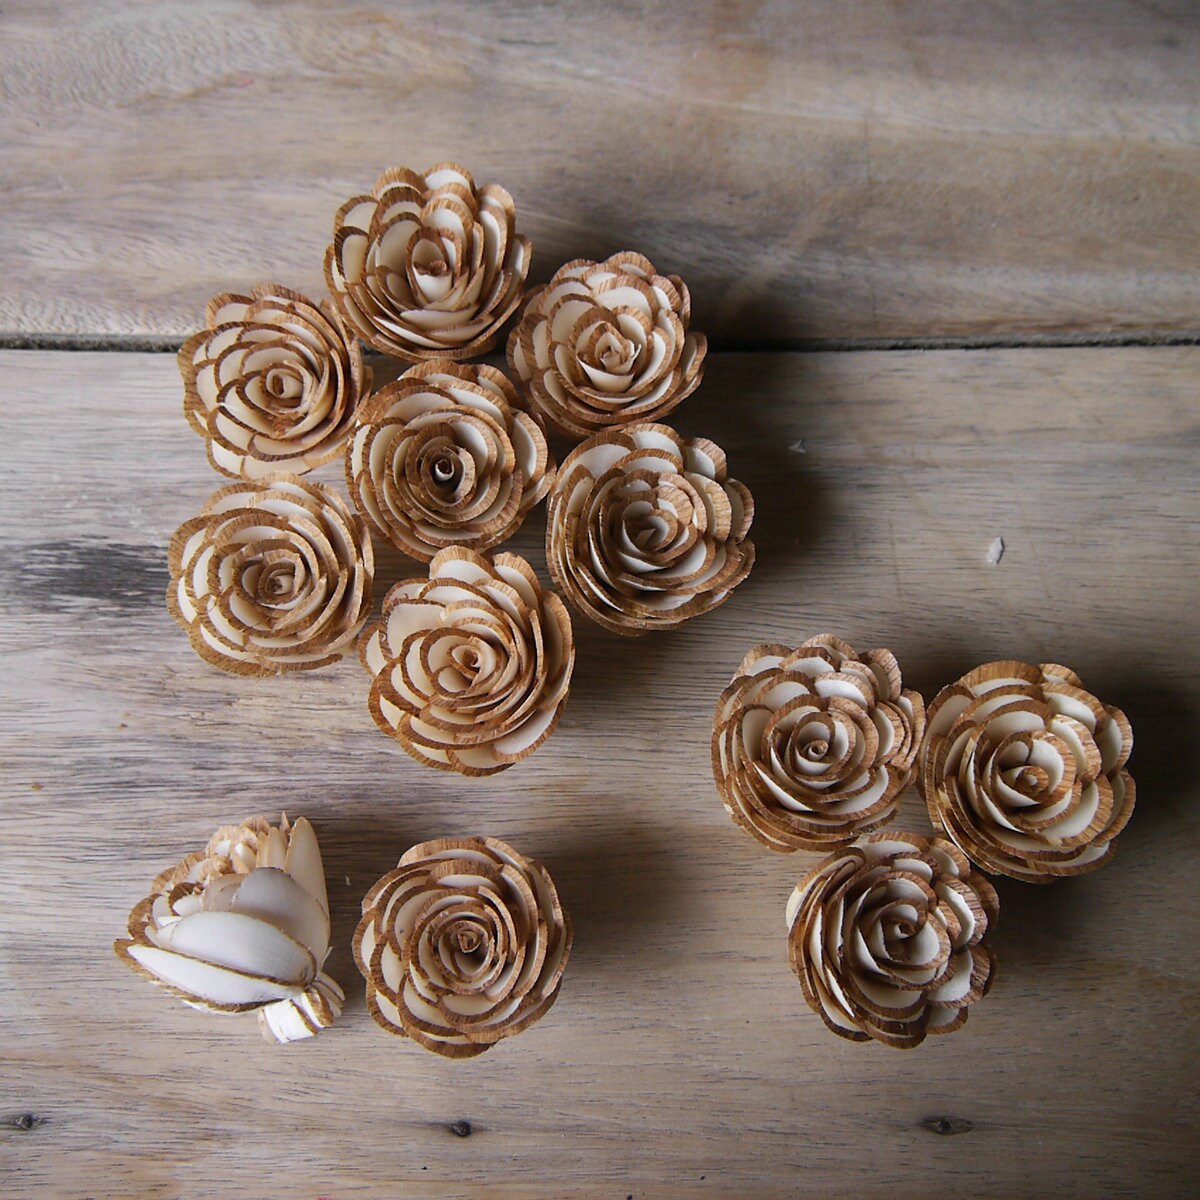 Kaufe 4 Stück Diffusor-Blume mit Baumwollfaden, Holz-Rosenblume